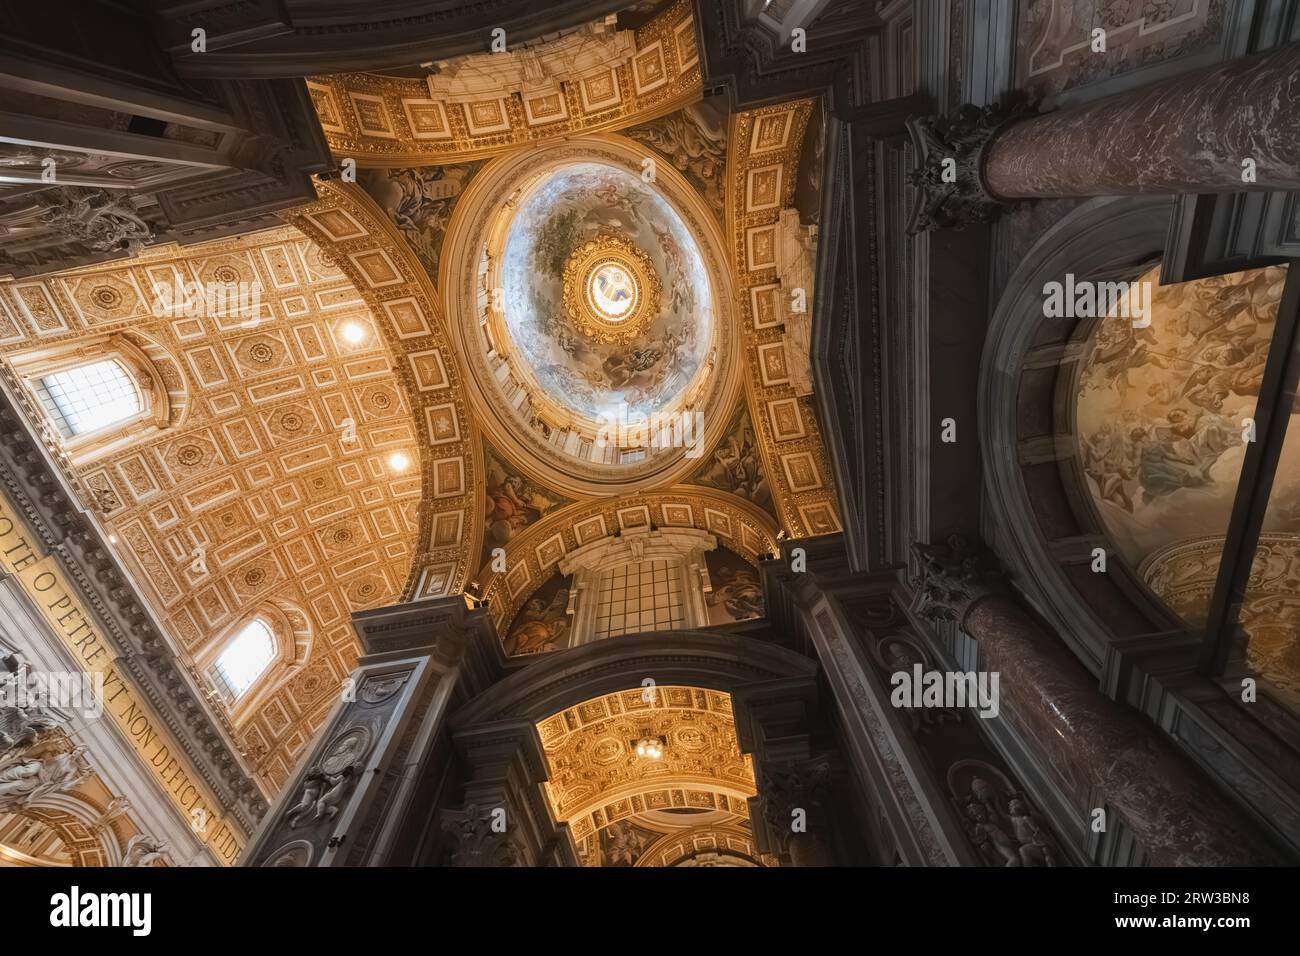 Extravagant interior of Saint Peter's Basilica, home of the Roman Catholic Church in Vatican City, Rome, Italy. Stock Photo